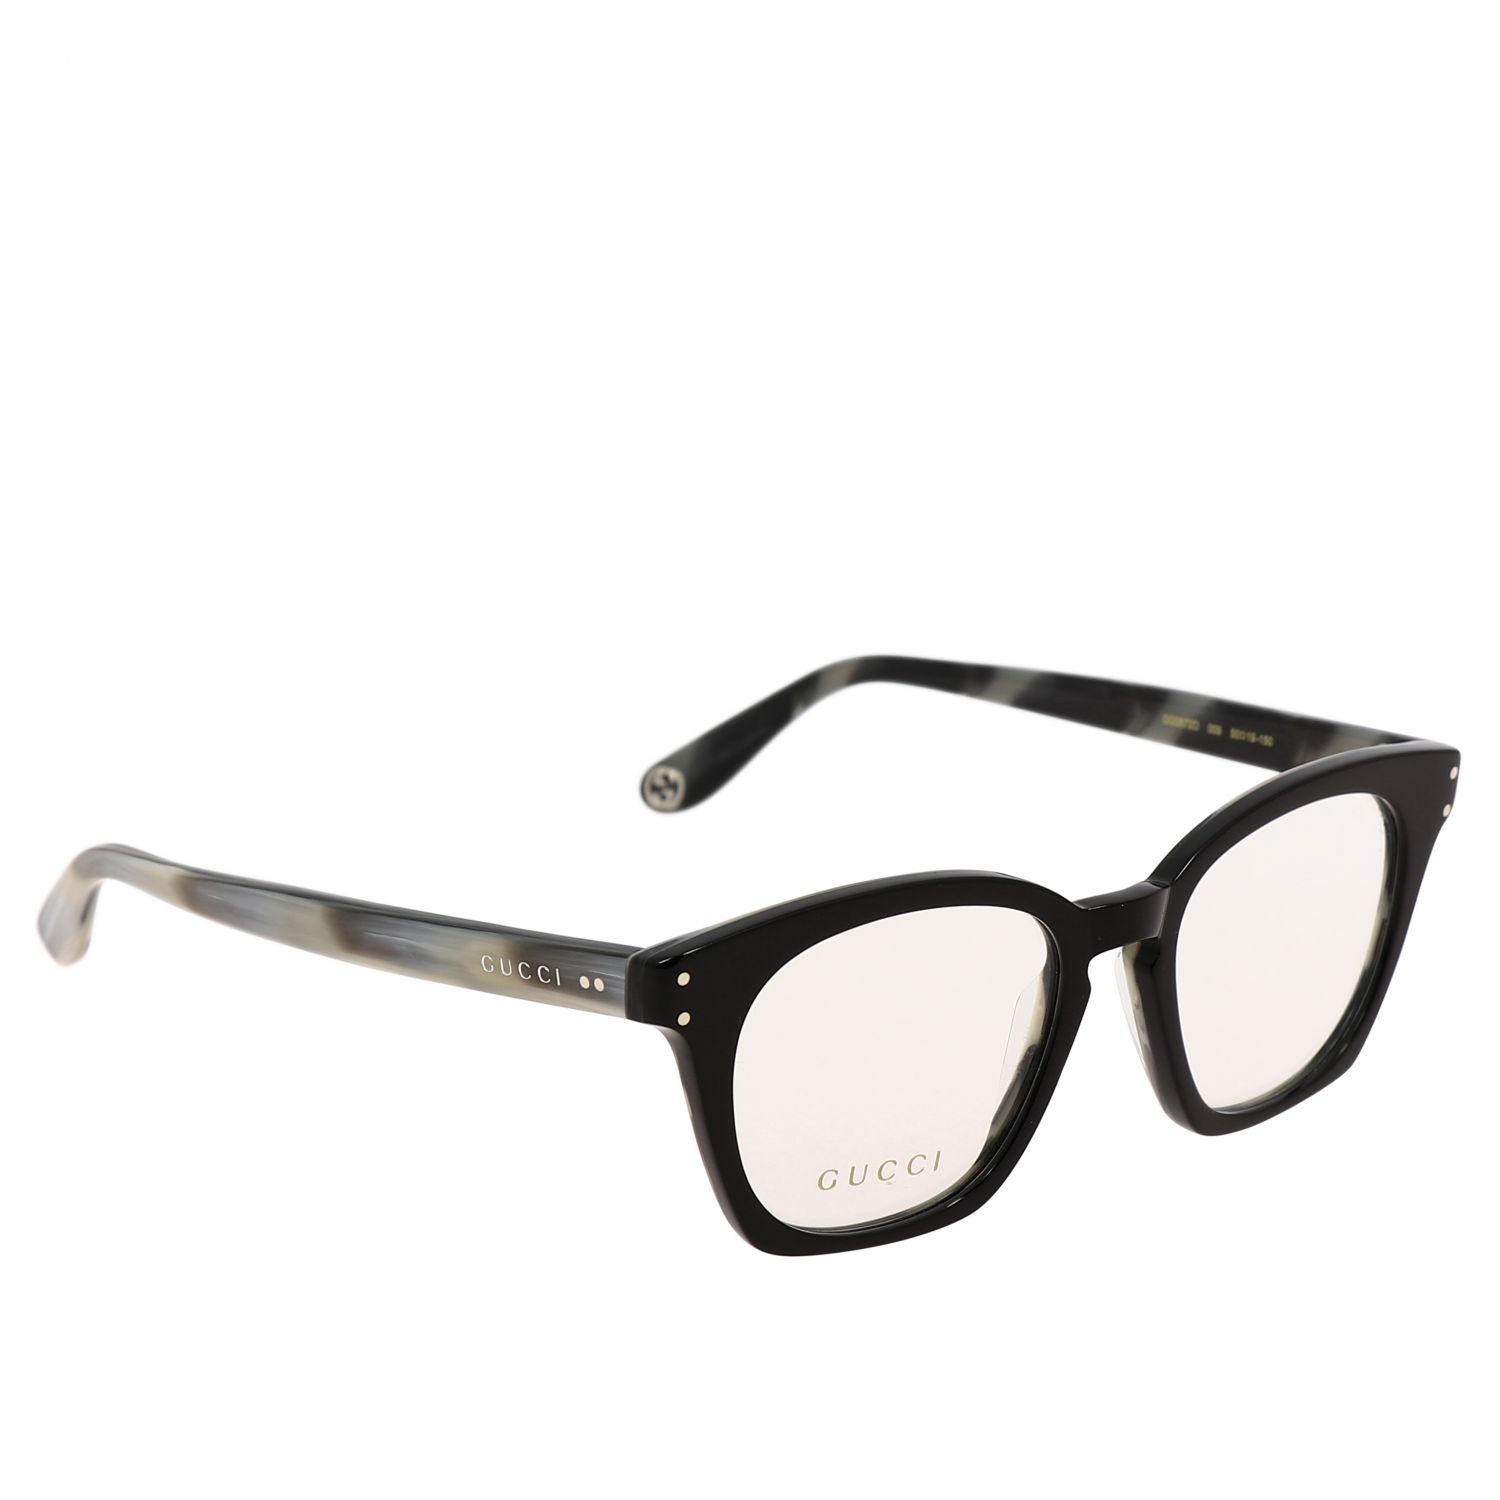 gucci glasses men